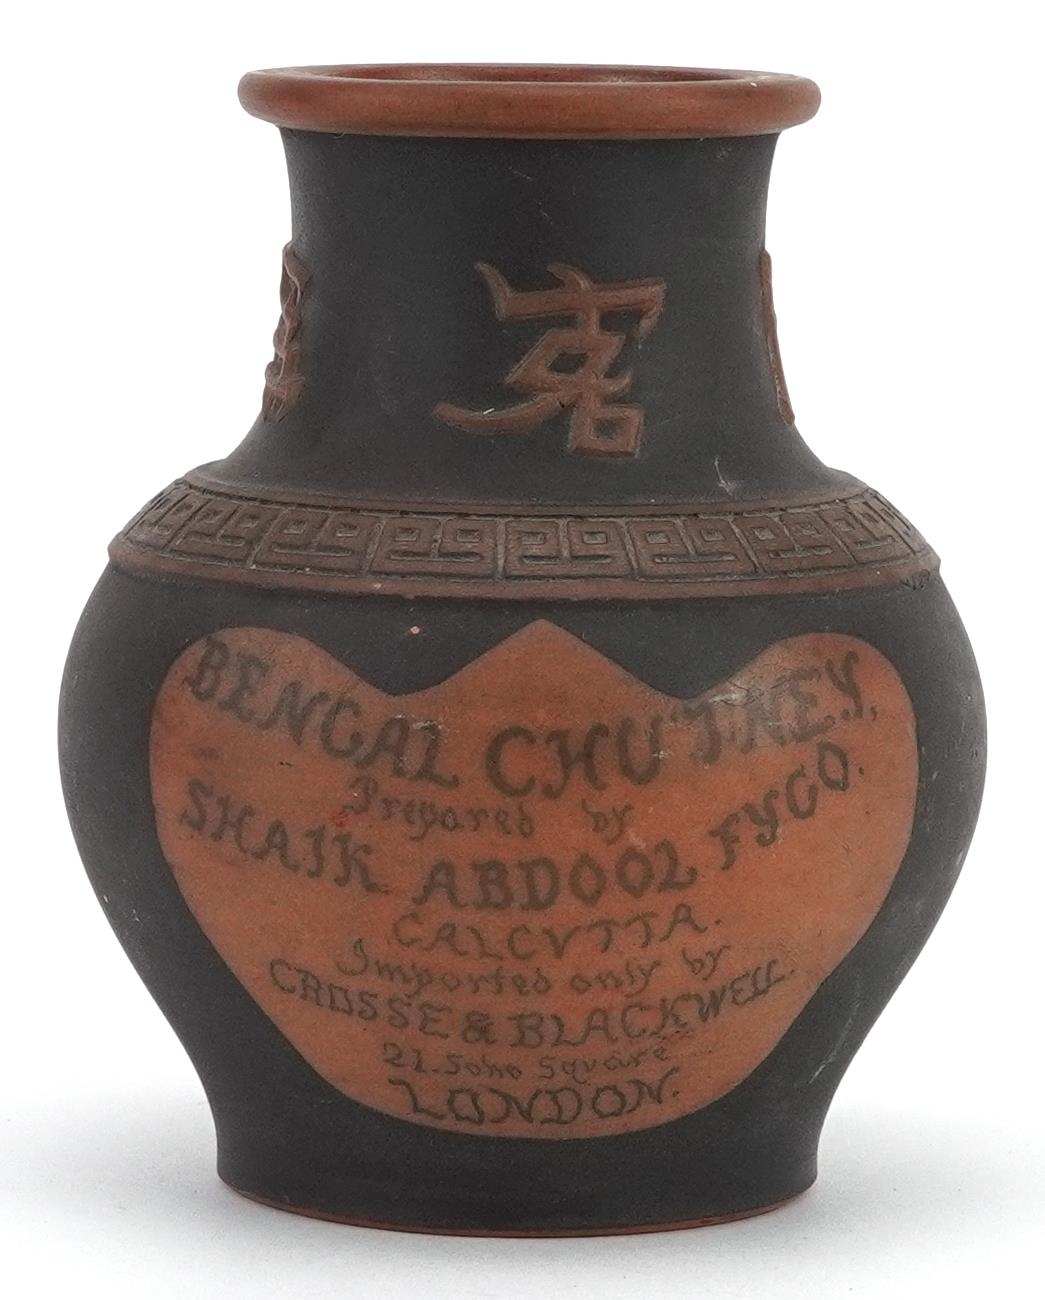 19th century terracotta Bengal Chutney advertising jar prepared by Shalk Abdool Fyco, 10cm high :